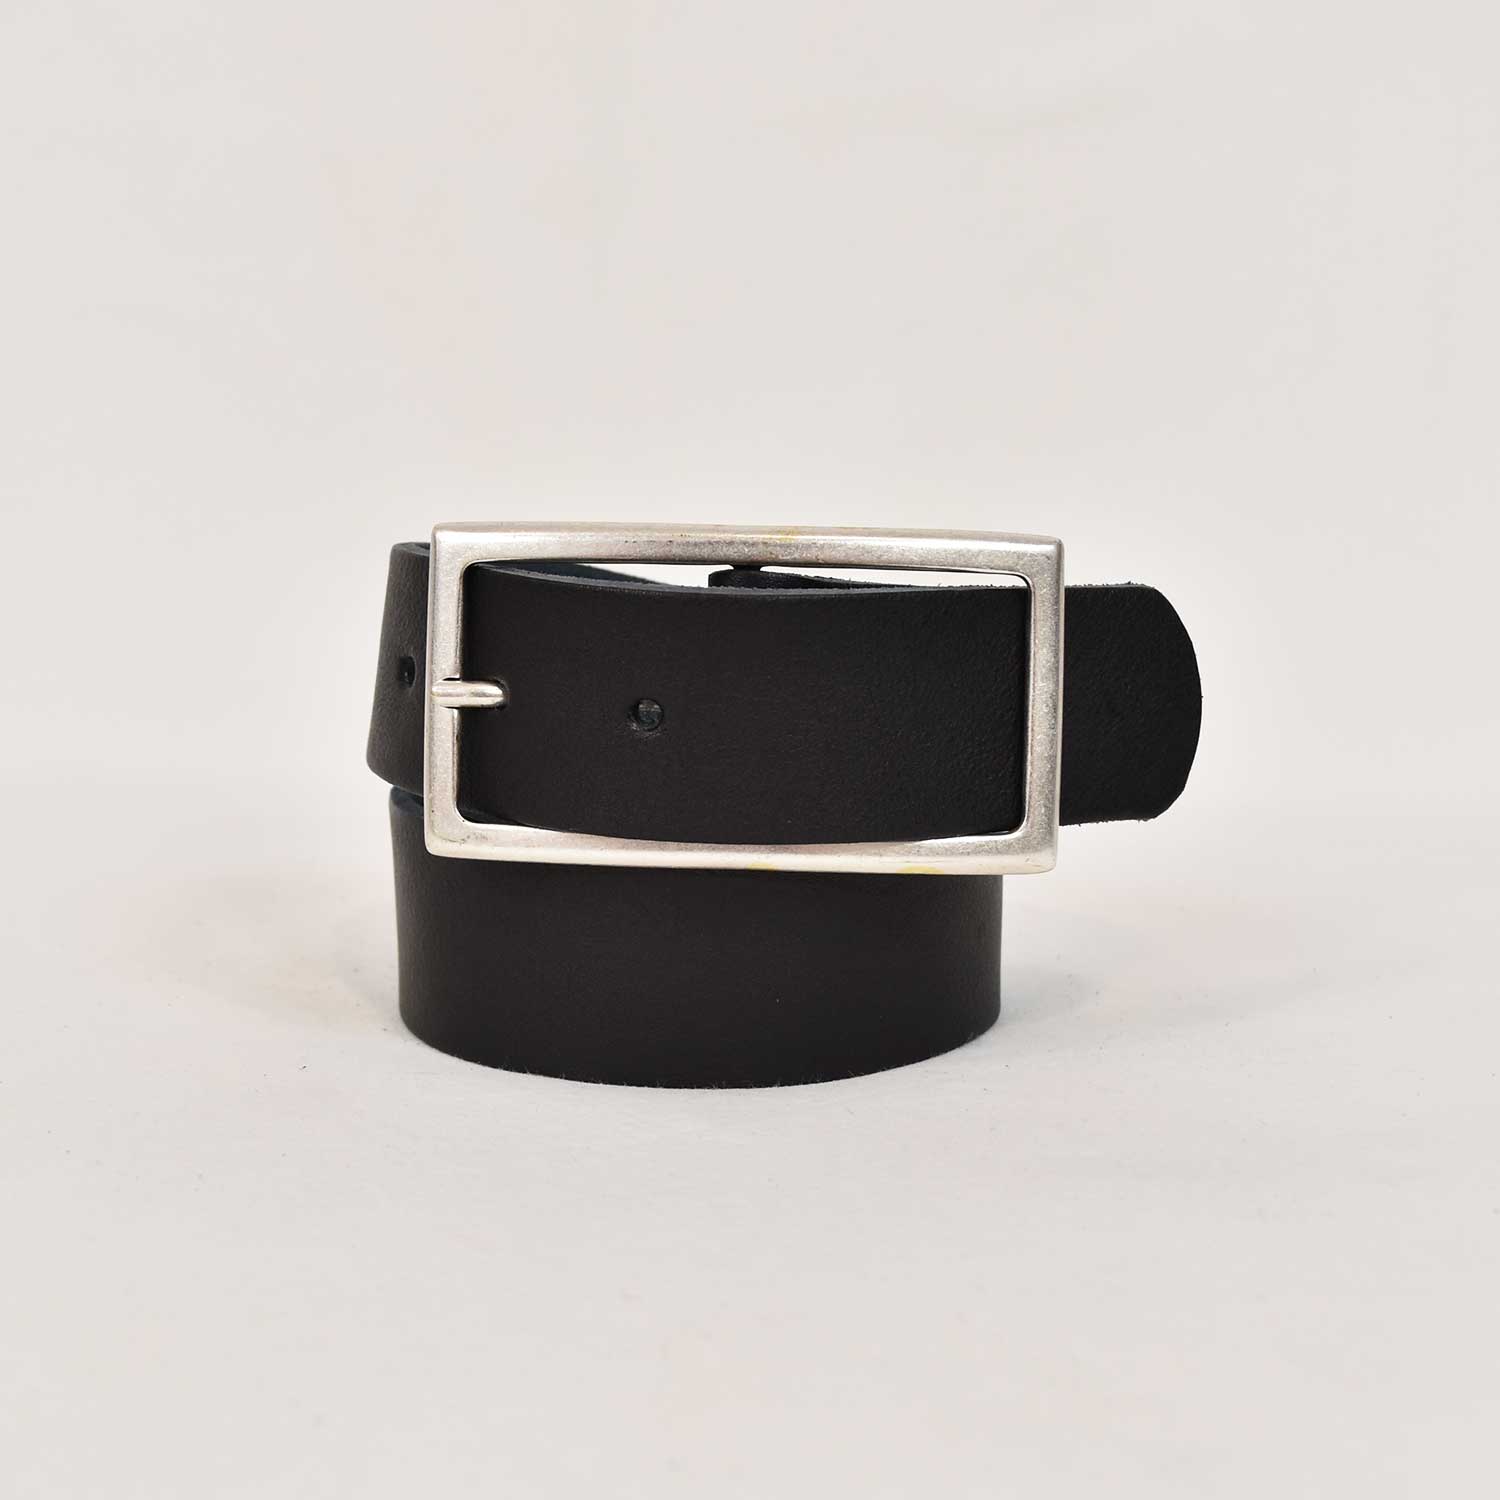 Cinturón hebilla rectangular negro